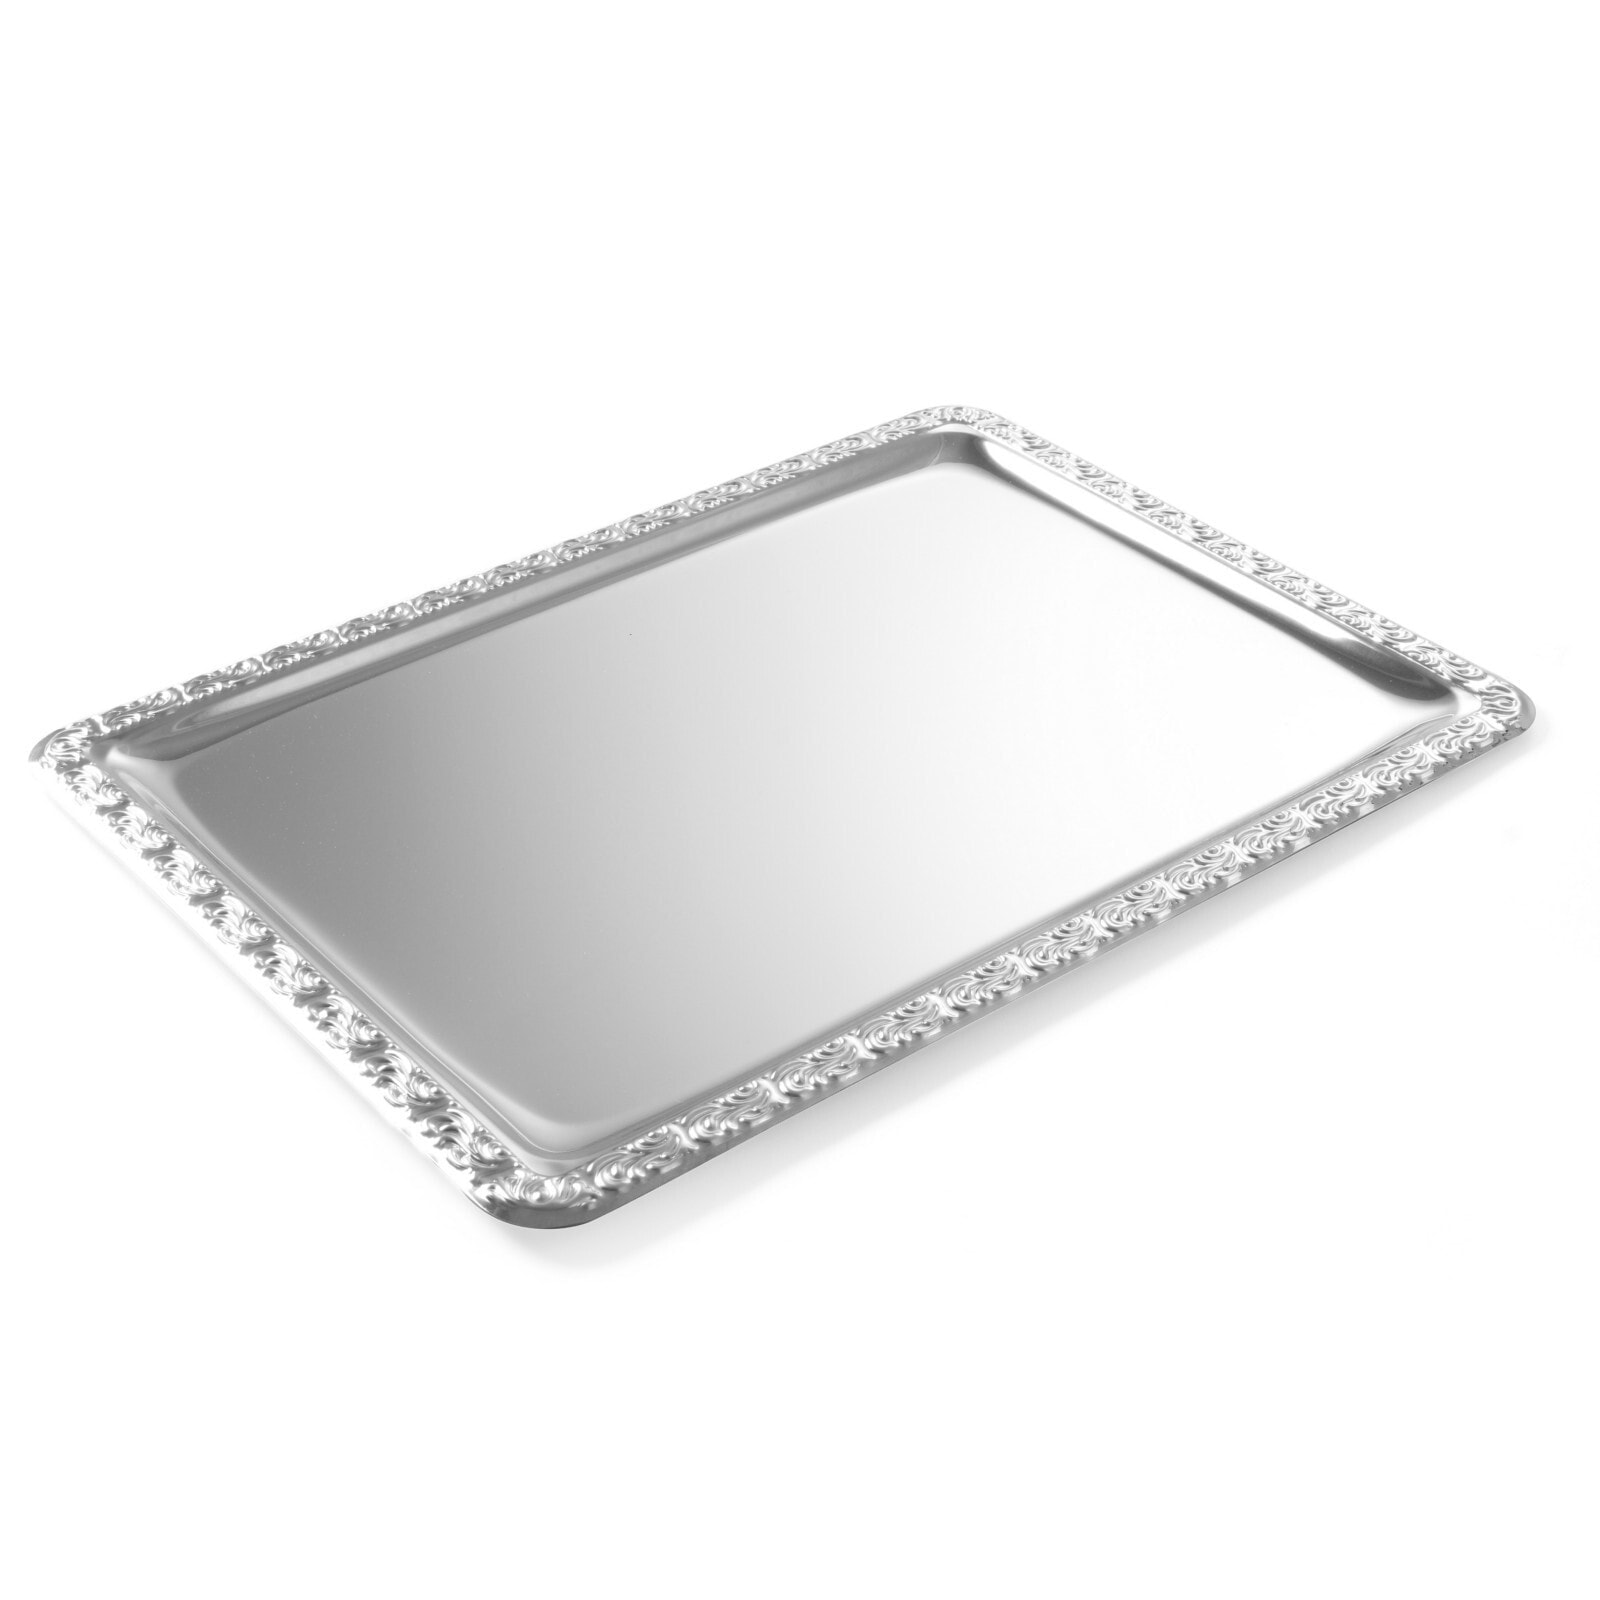 Rectangular steel tray with a decorative edge GN1 / 1 - Hendi 807804